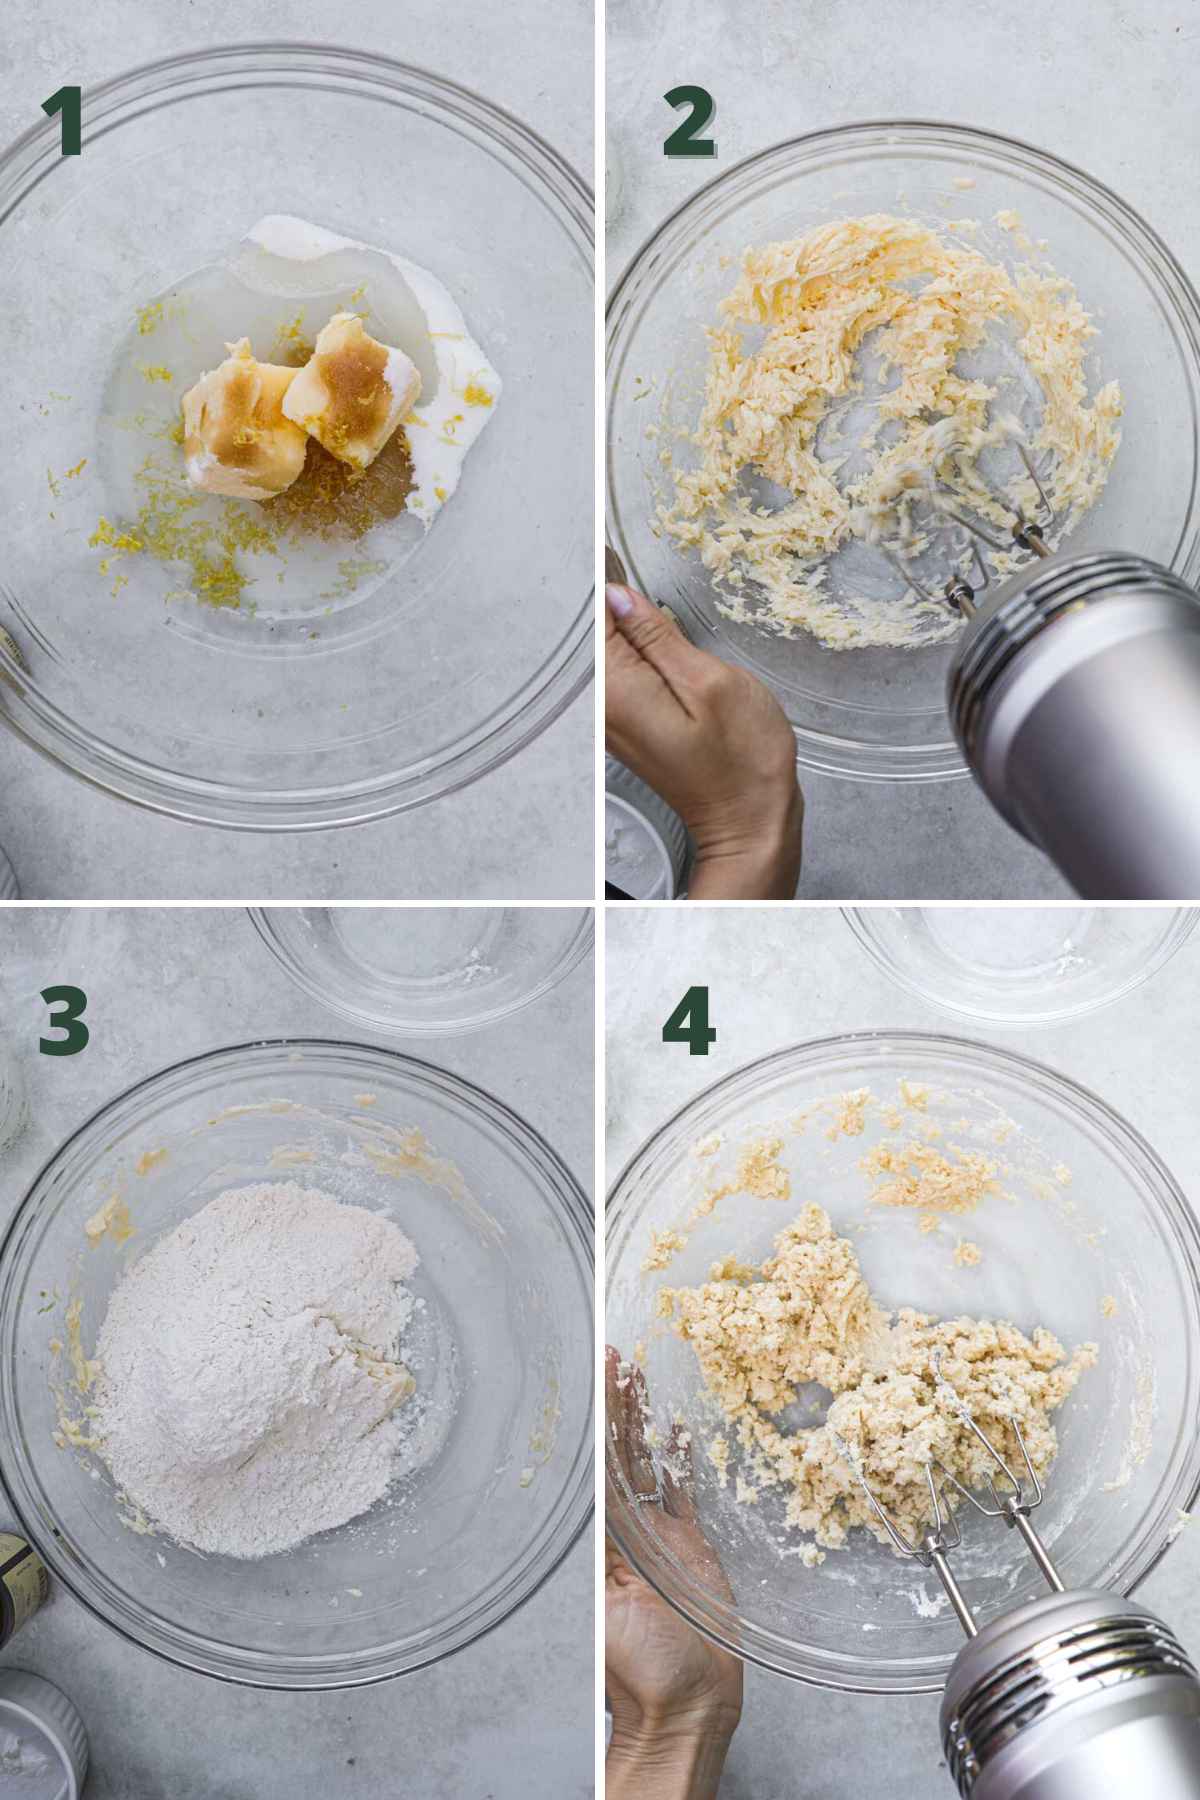 Steps to make lemon shortbread cookies with lemon glaze, including creaming butter, lemon juice and zest, sugar, flour, and kosher salt until it forms a dough.